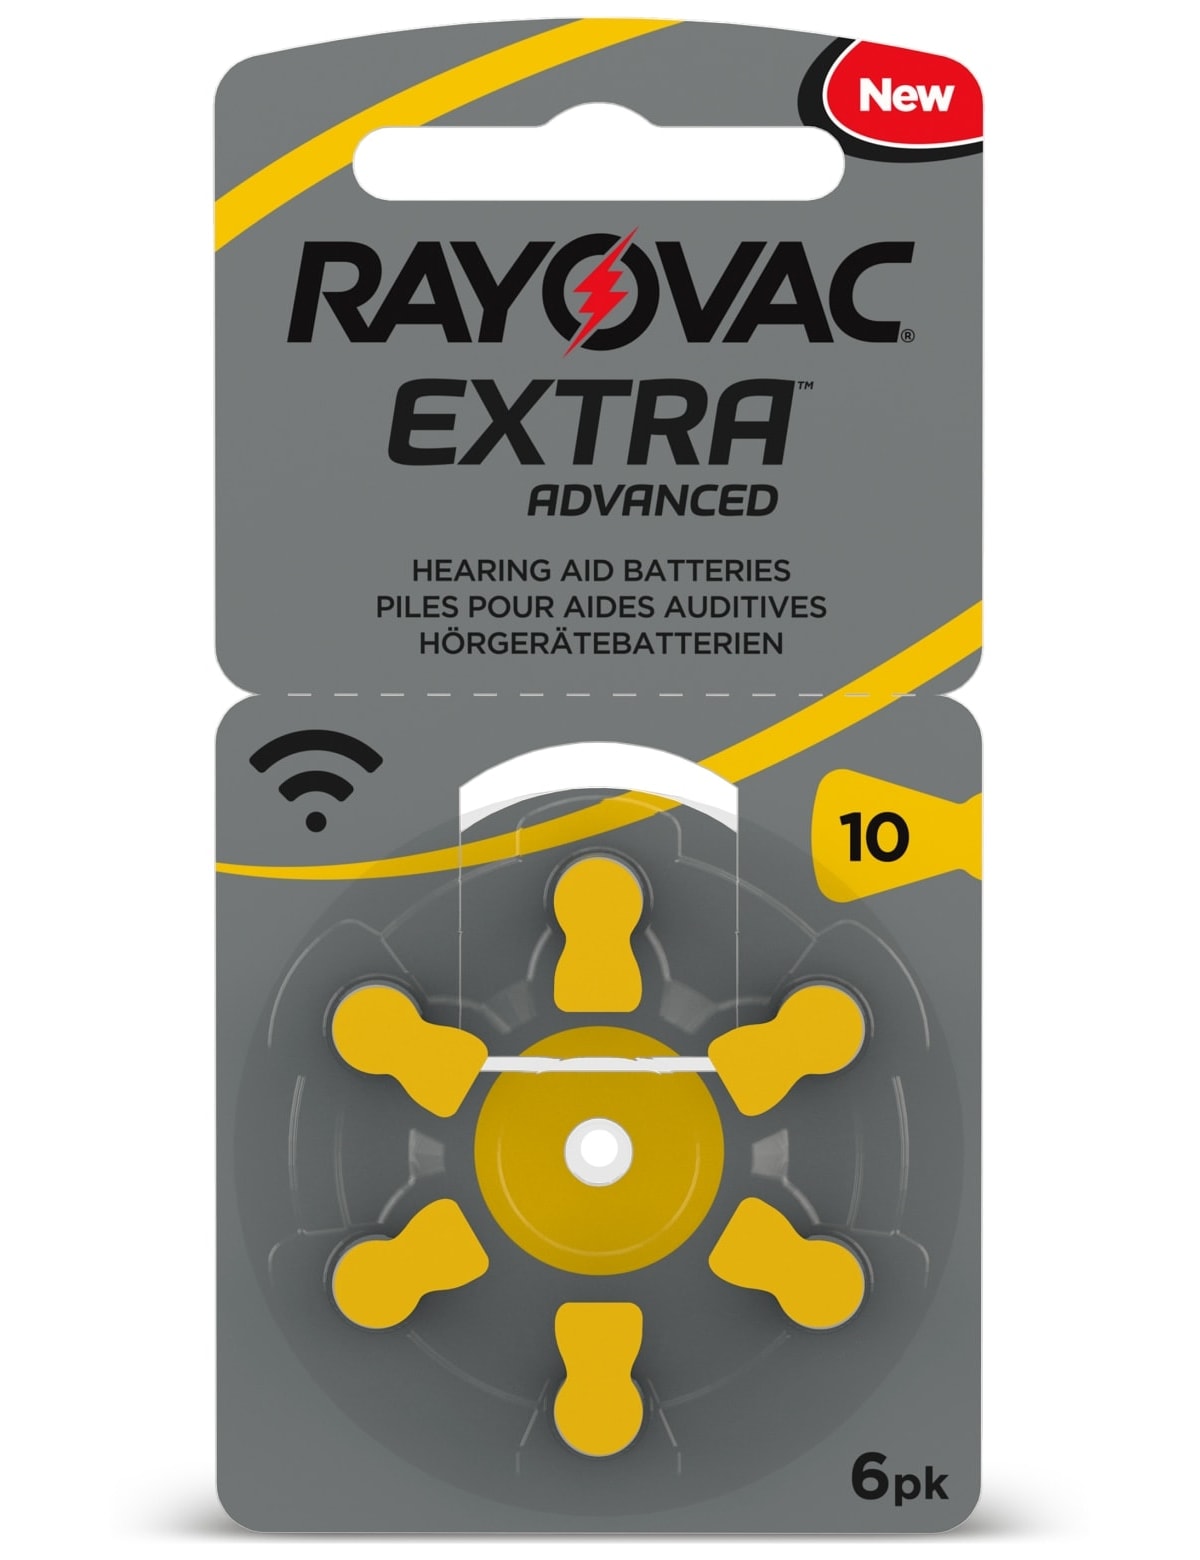 RAYOVAC Hörgeräte-Batterie, EXTRA ADVANCED, Größe 10, 6 Stück